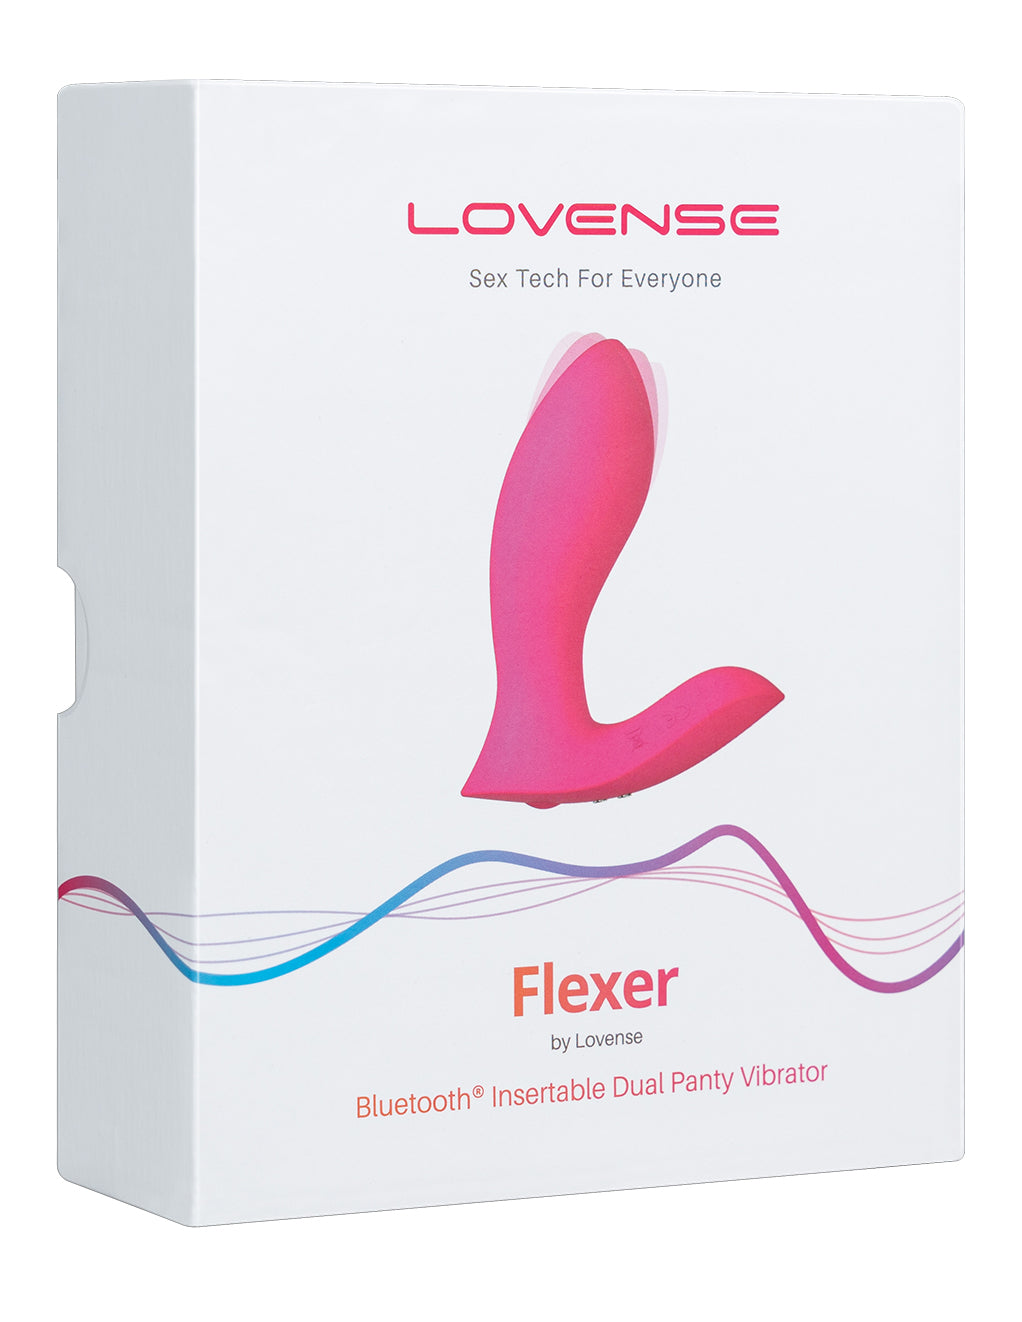 Lovense Flexer - Box Front